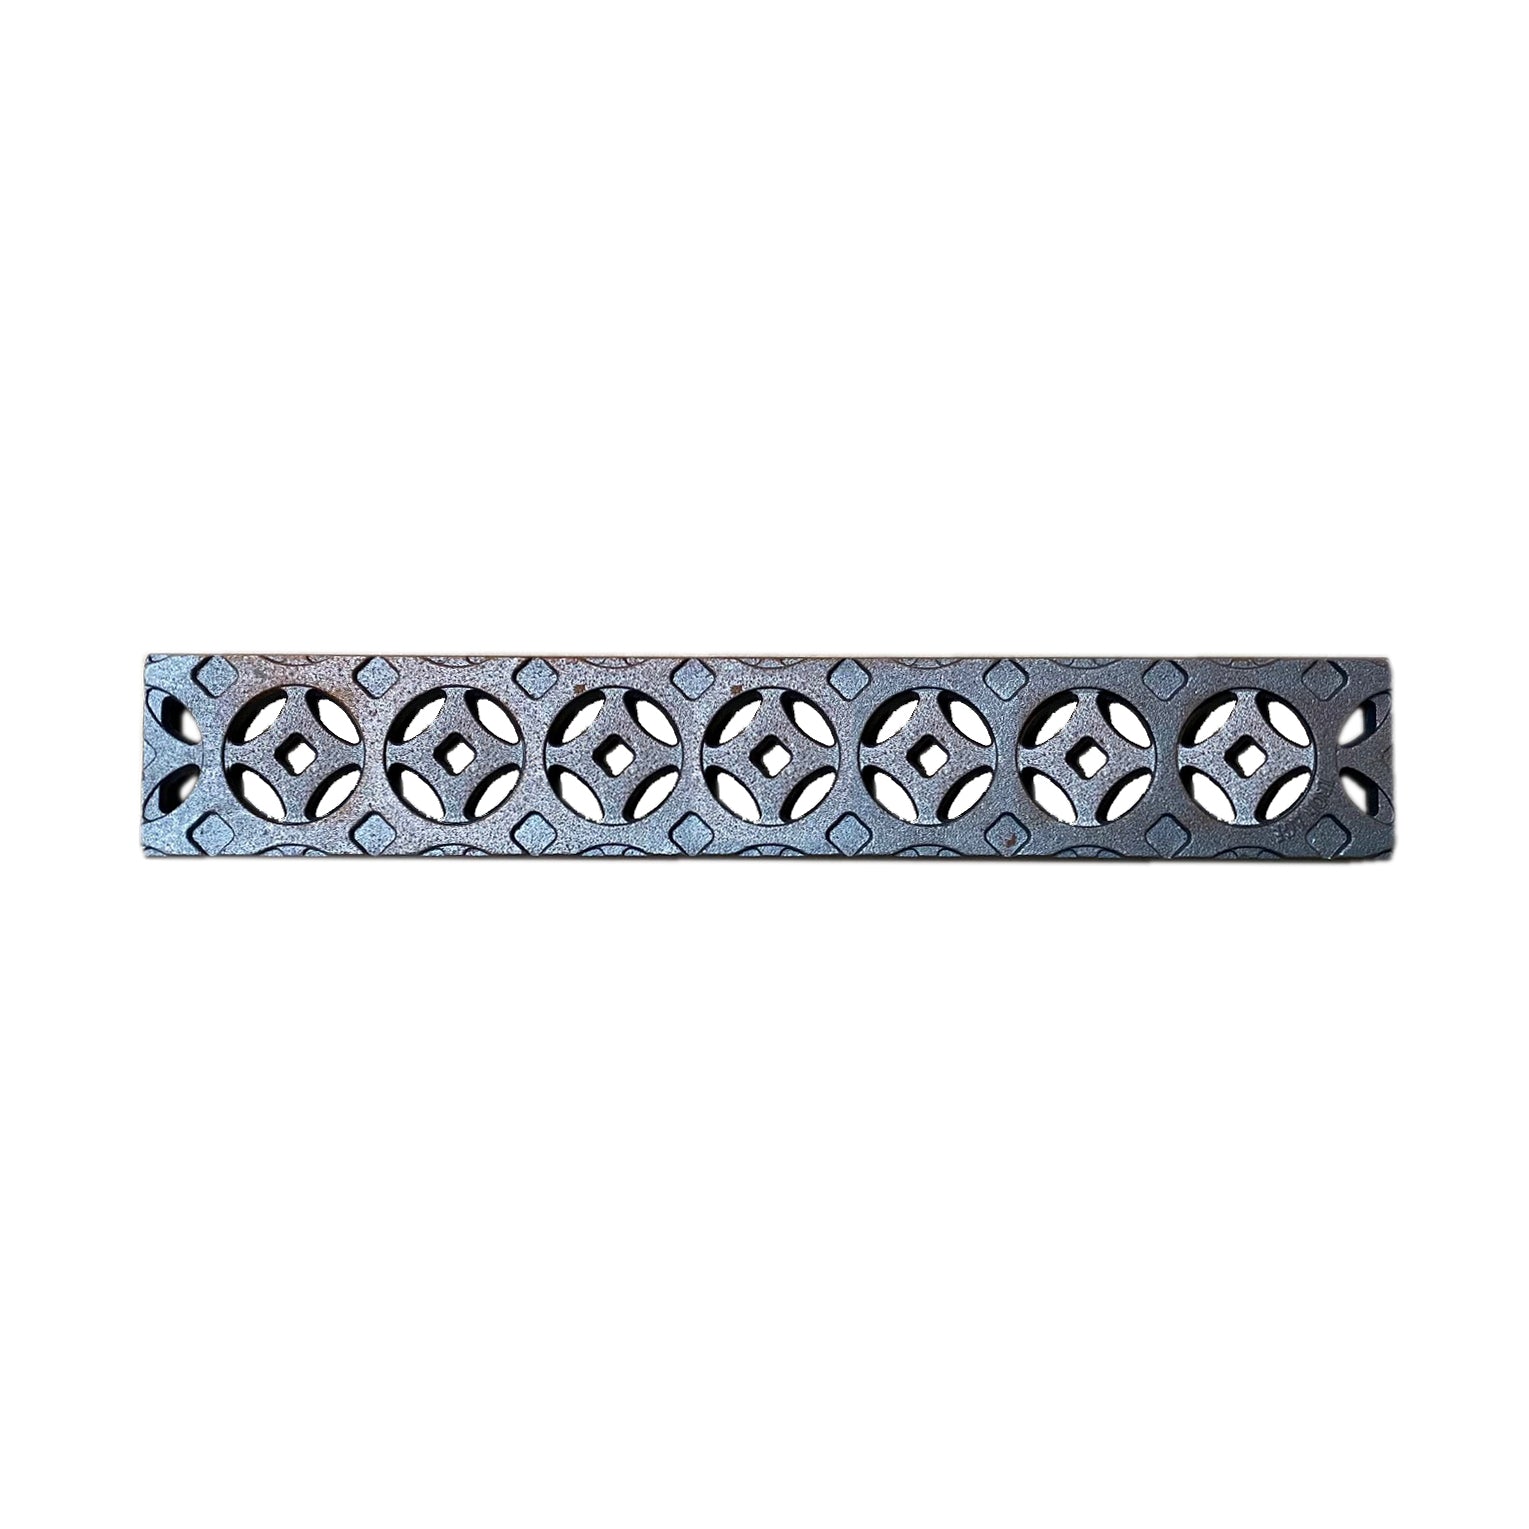 [CLEARANCE] Interlaken Cast Iron Channel Drain Grate 454 x 75mm (18 x 3 Inch)